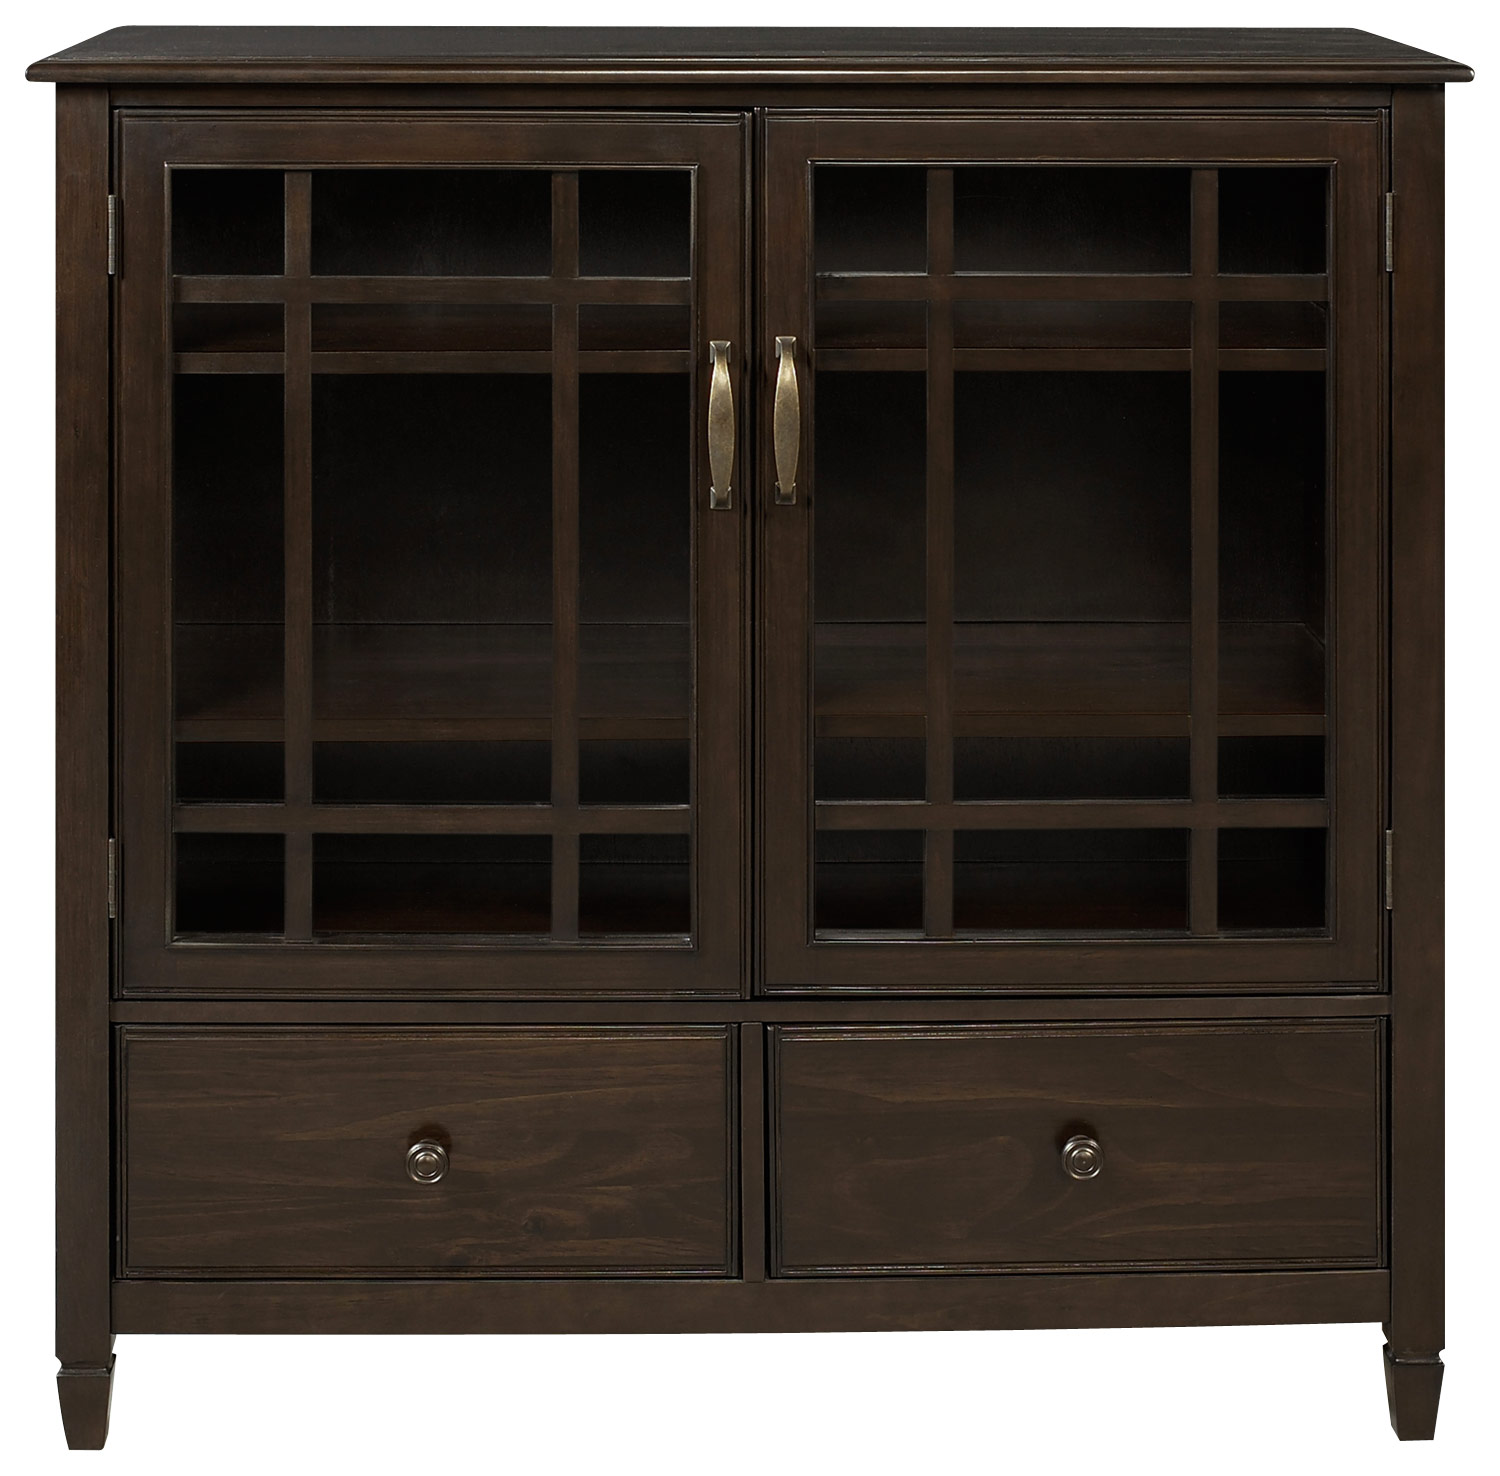 Simpli Home - Connaught Tall Storage Cabinet - Dark Chestnut Brown was $657.99 now $485.99 (26.0% off)